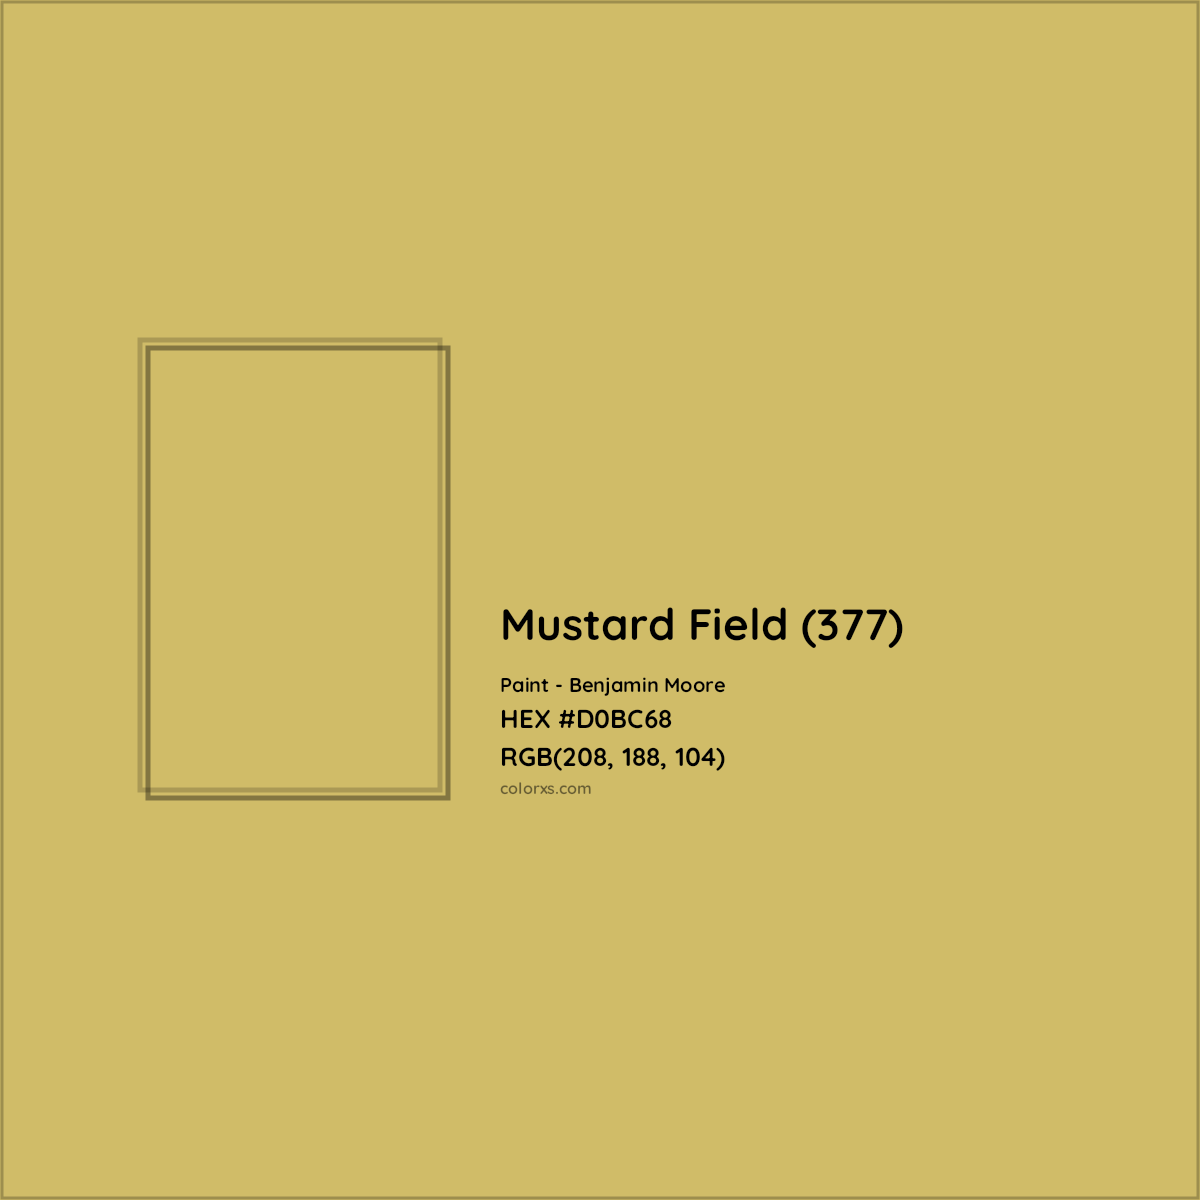 HEX #D0BC68 Mustard Field (377) Paint Benjamin Moore - Color Code